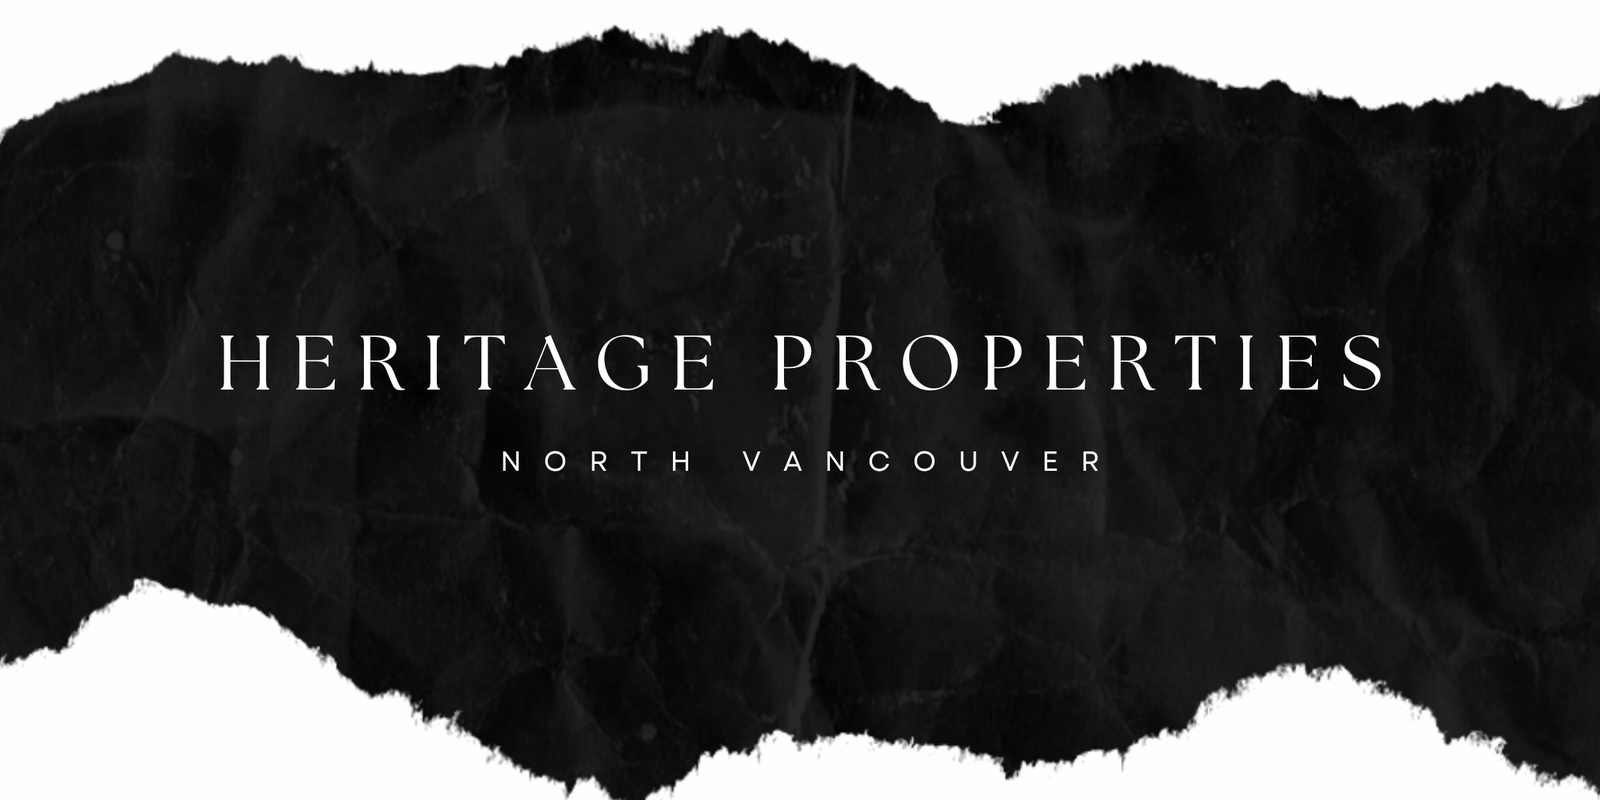 north vancouver heritage properties